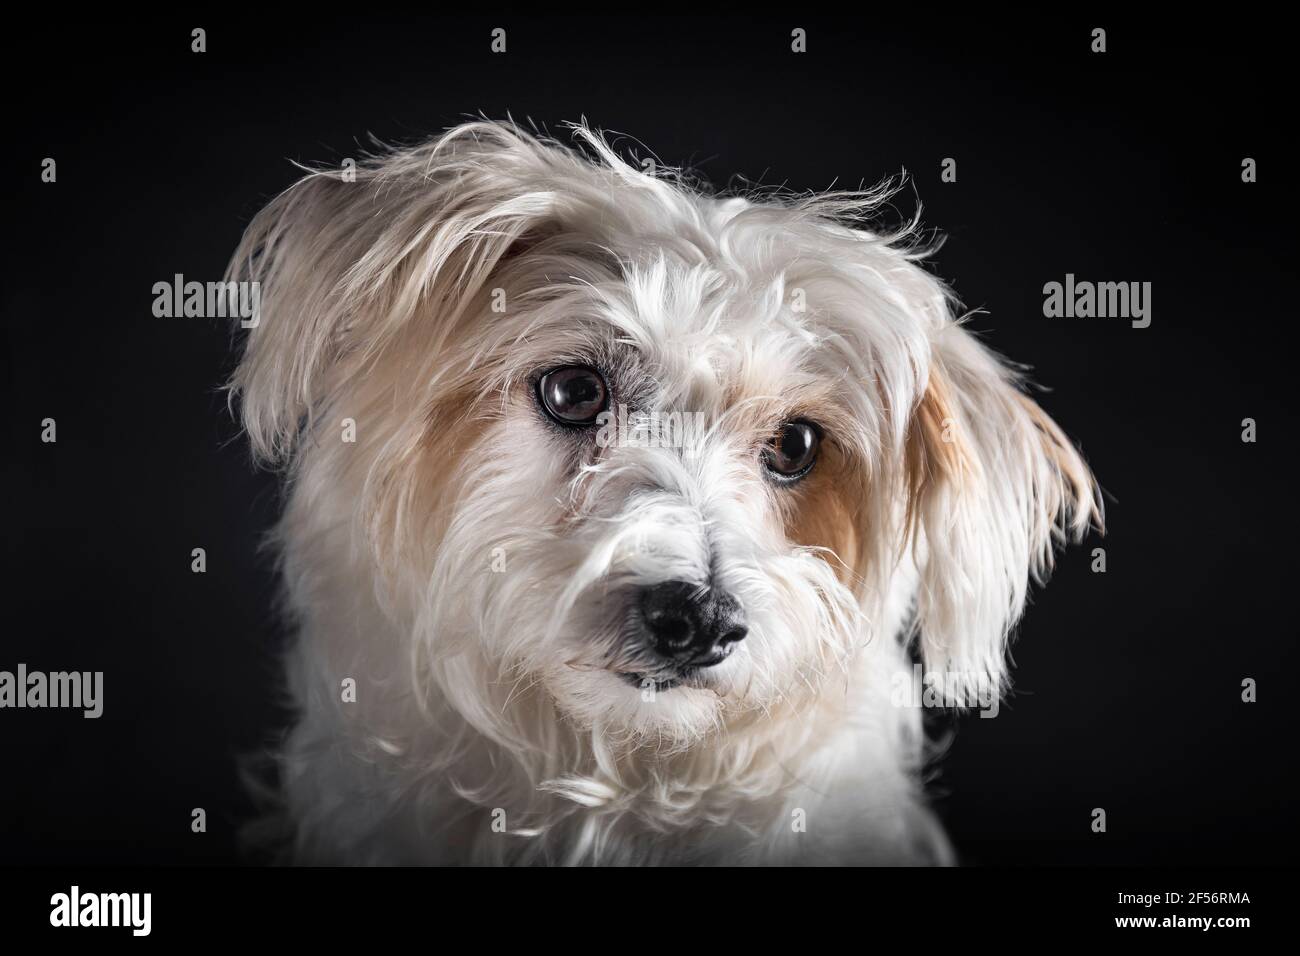 Mixed-breed dog against black background Stock Photo